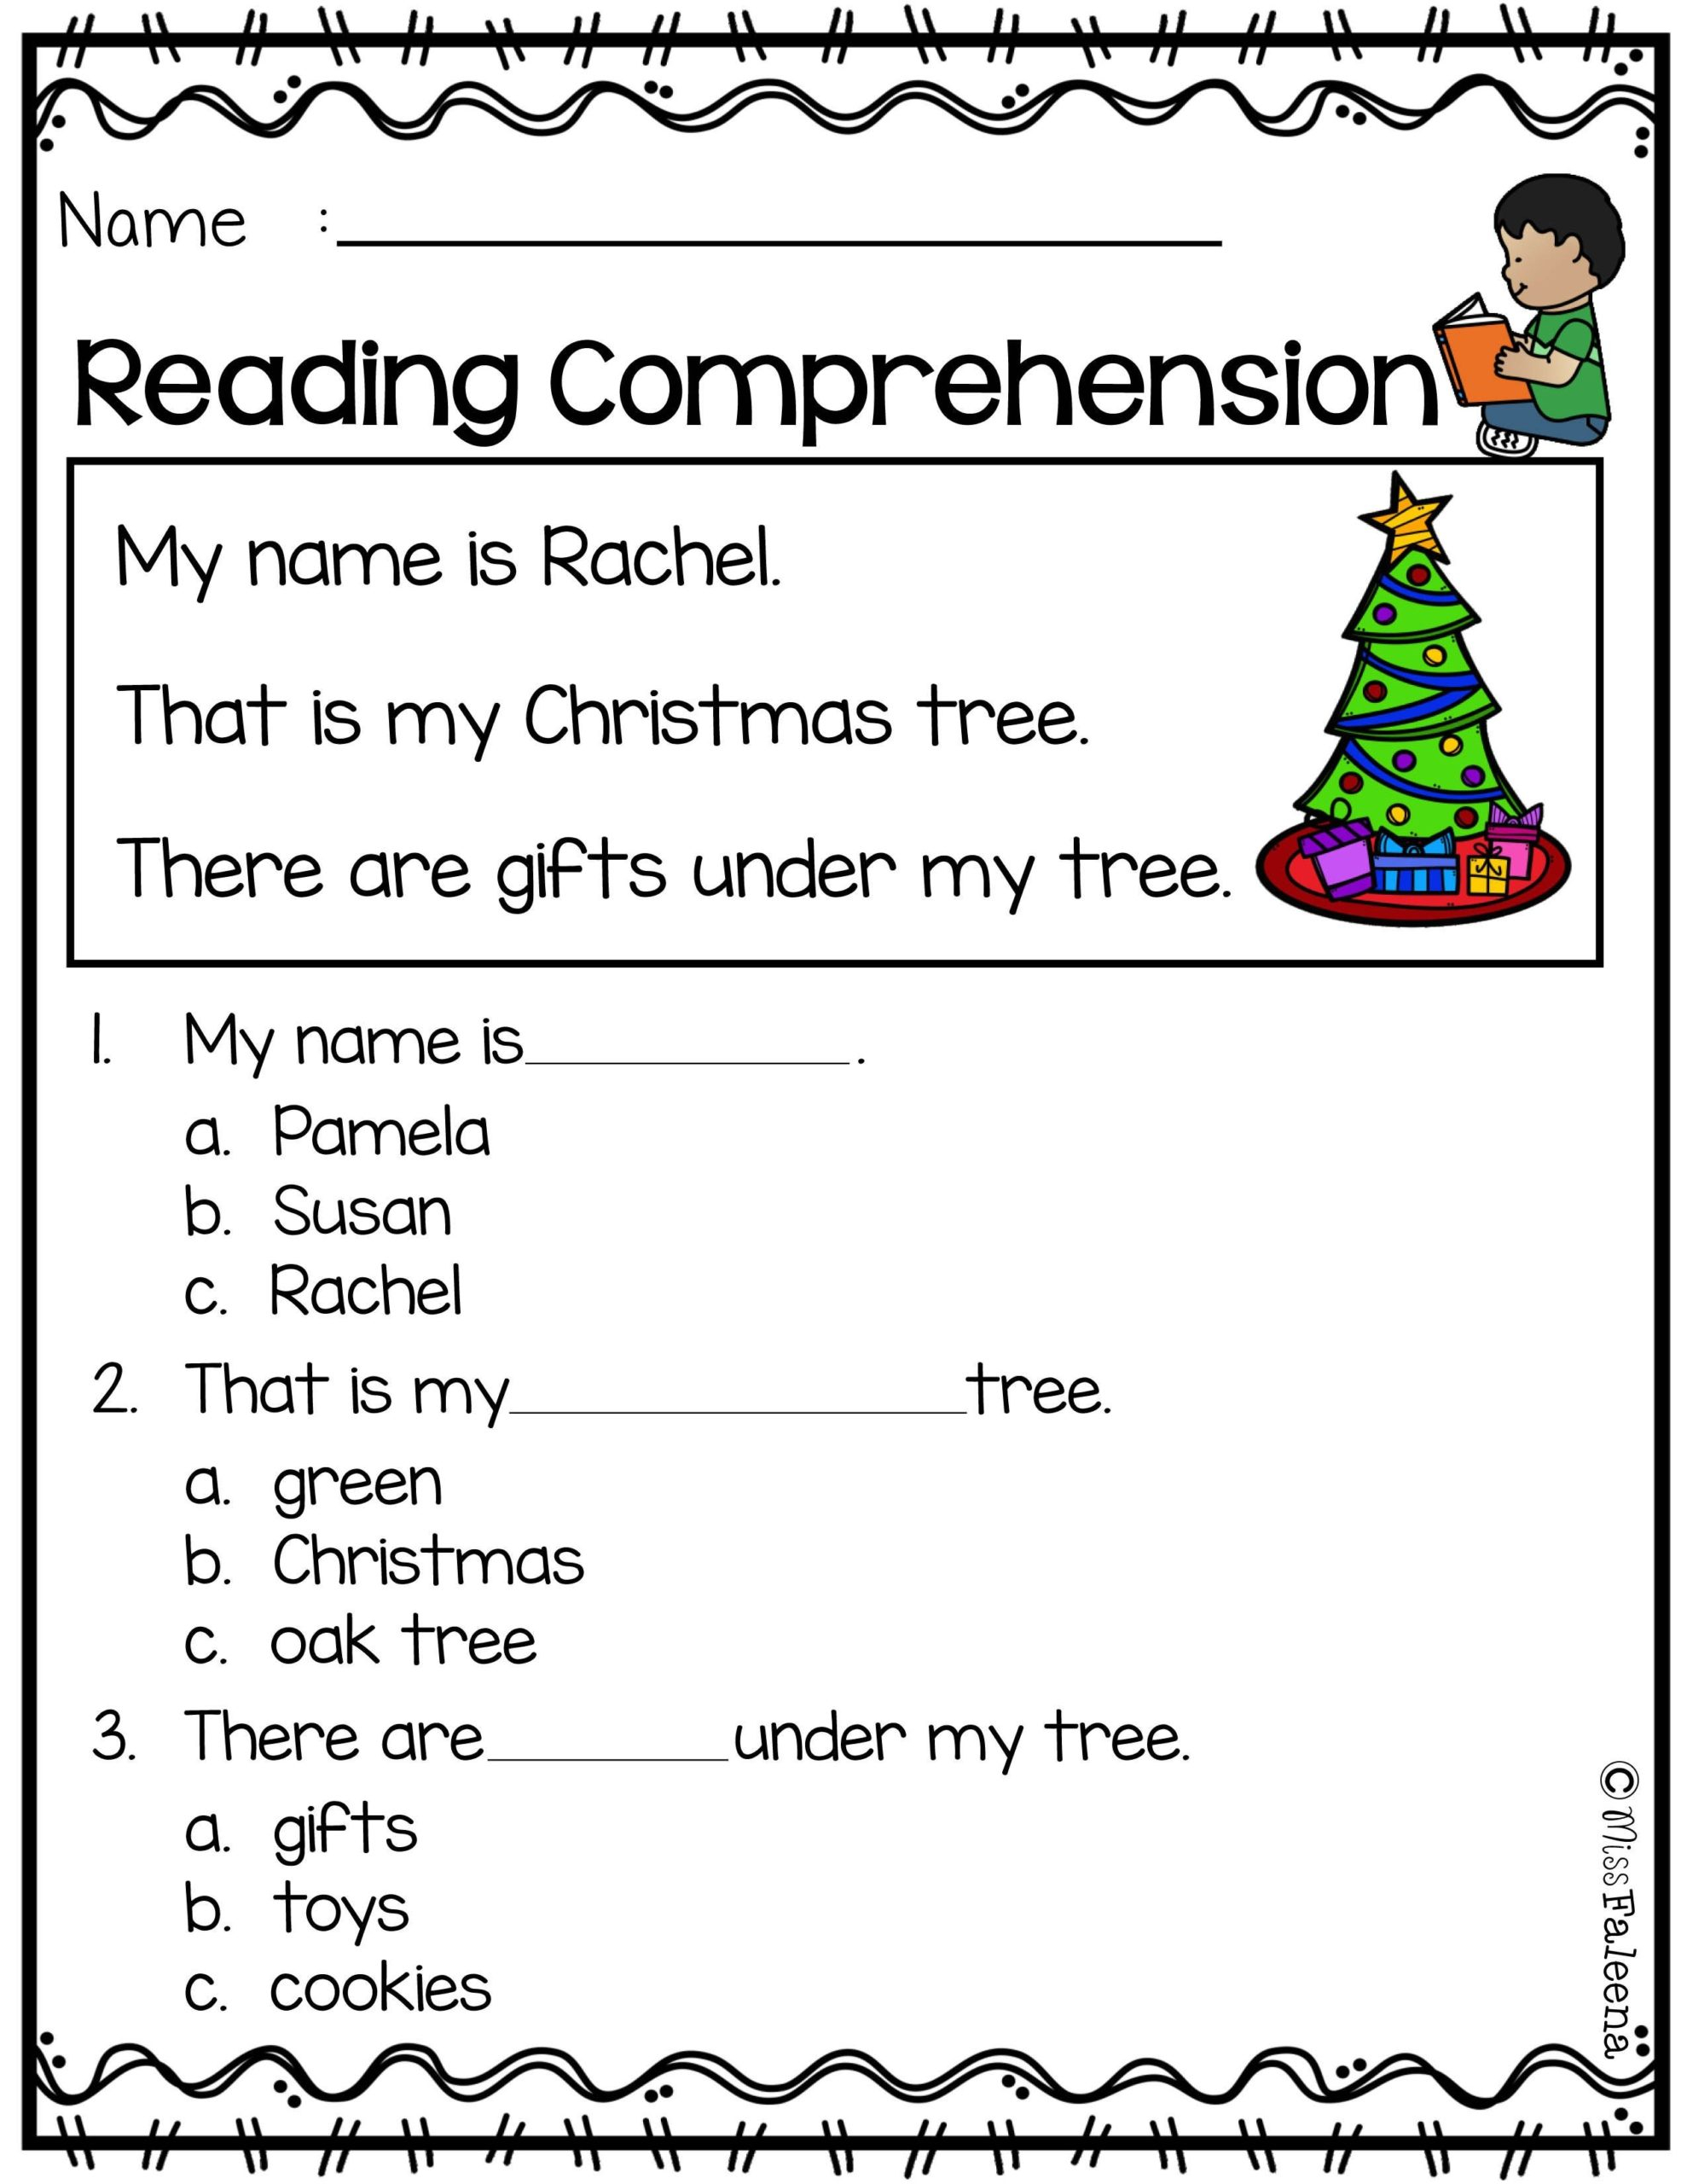 reading-comprehension-worksheets-for-grade-3-pdf-free-printable